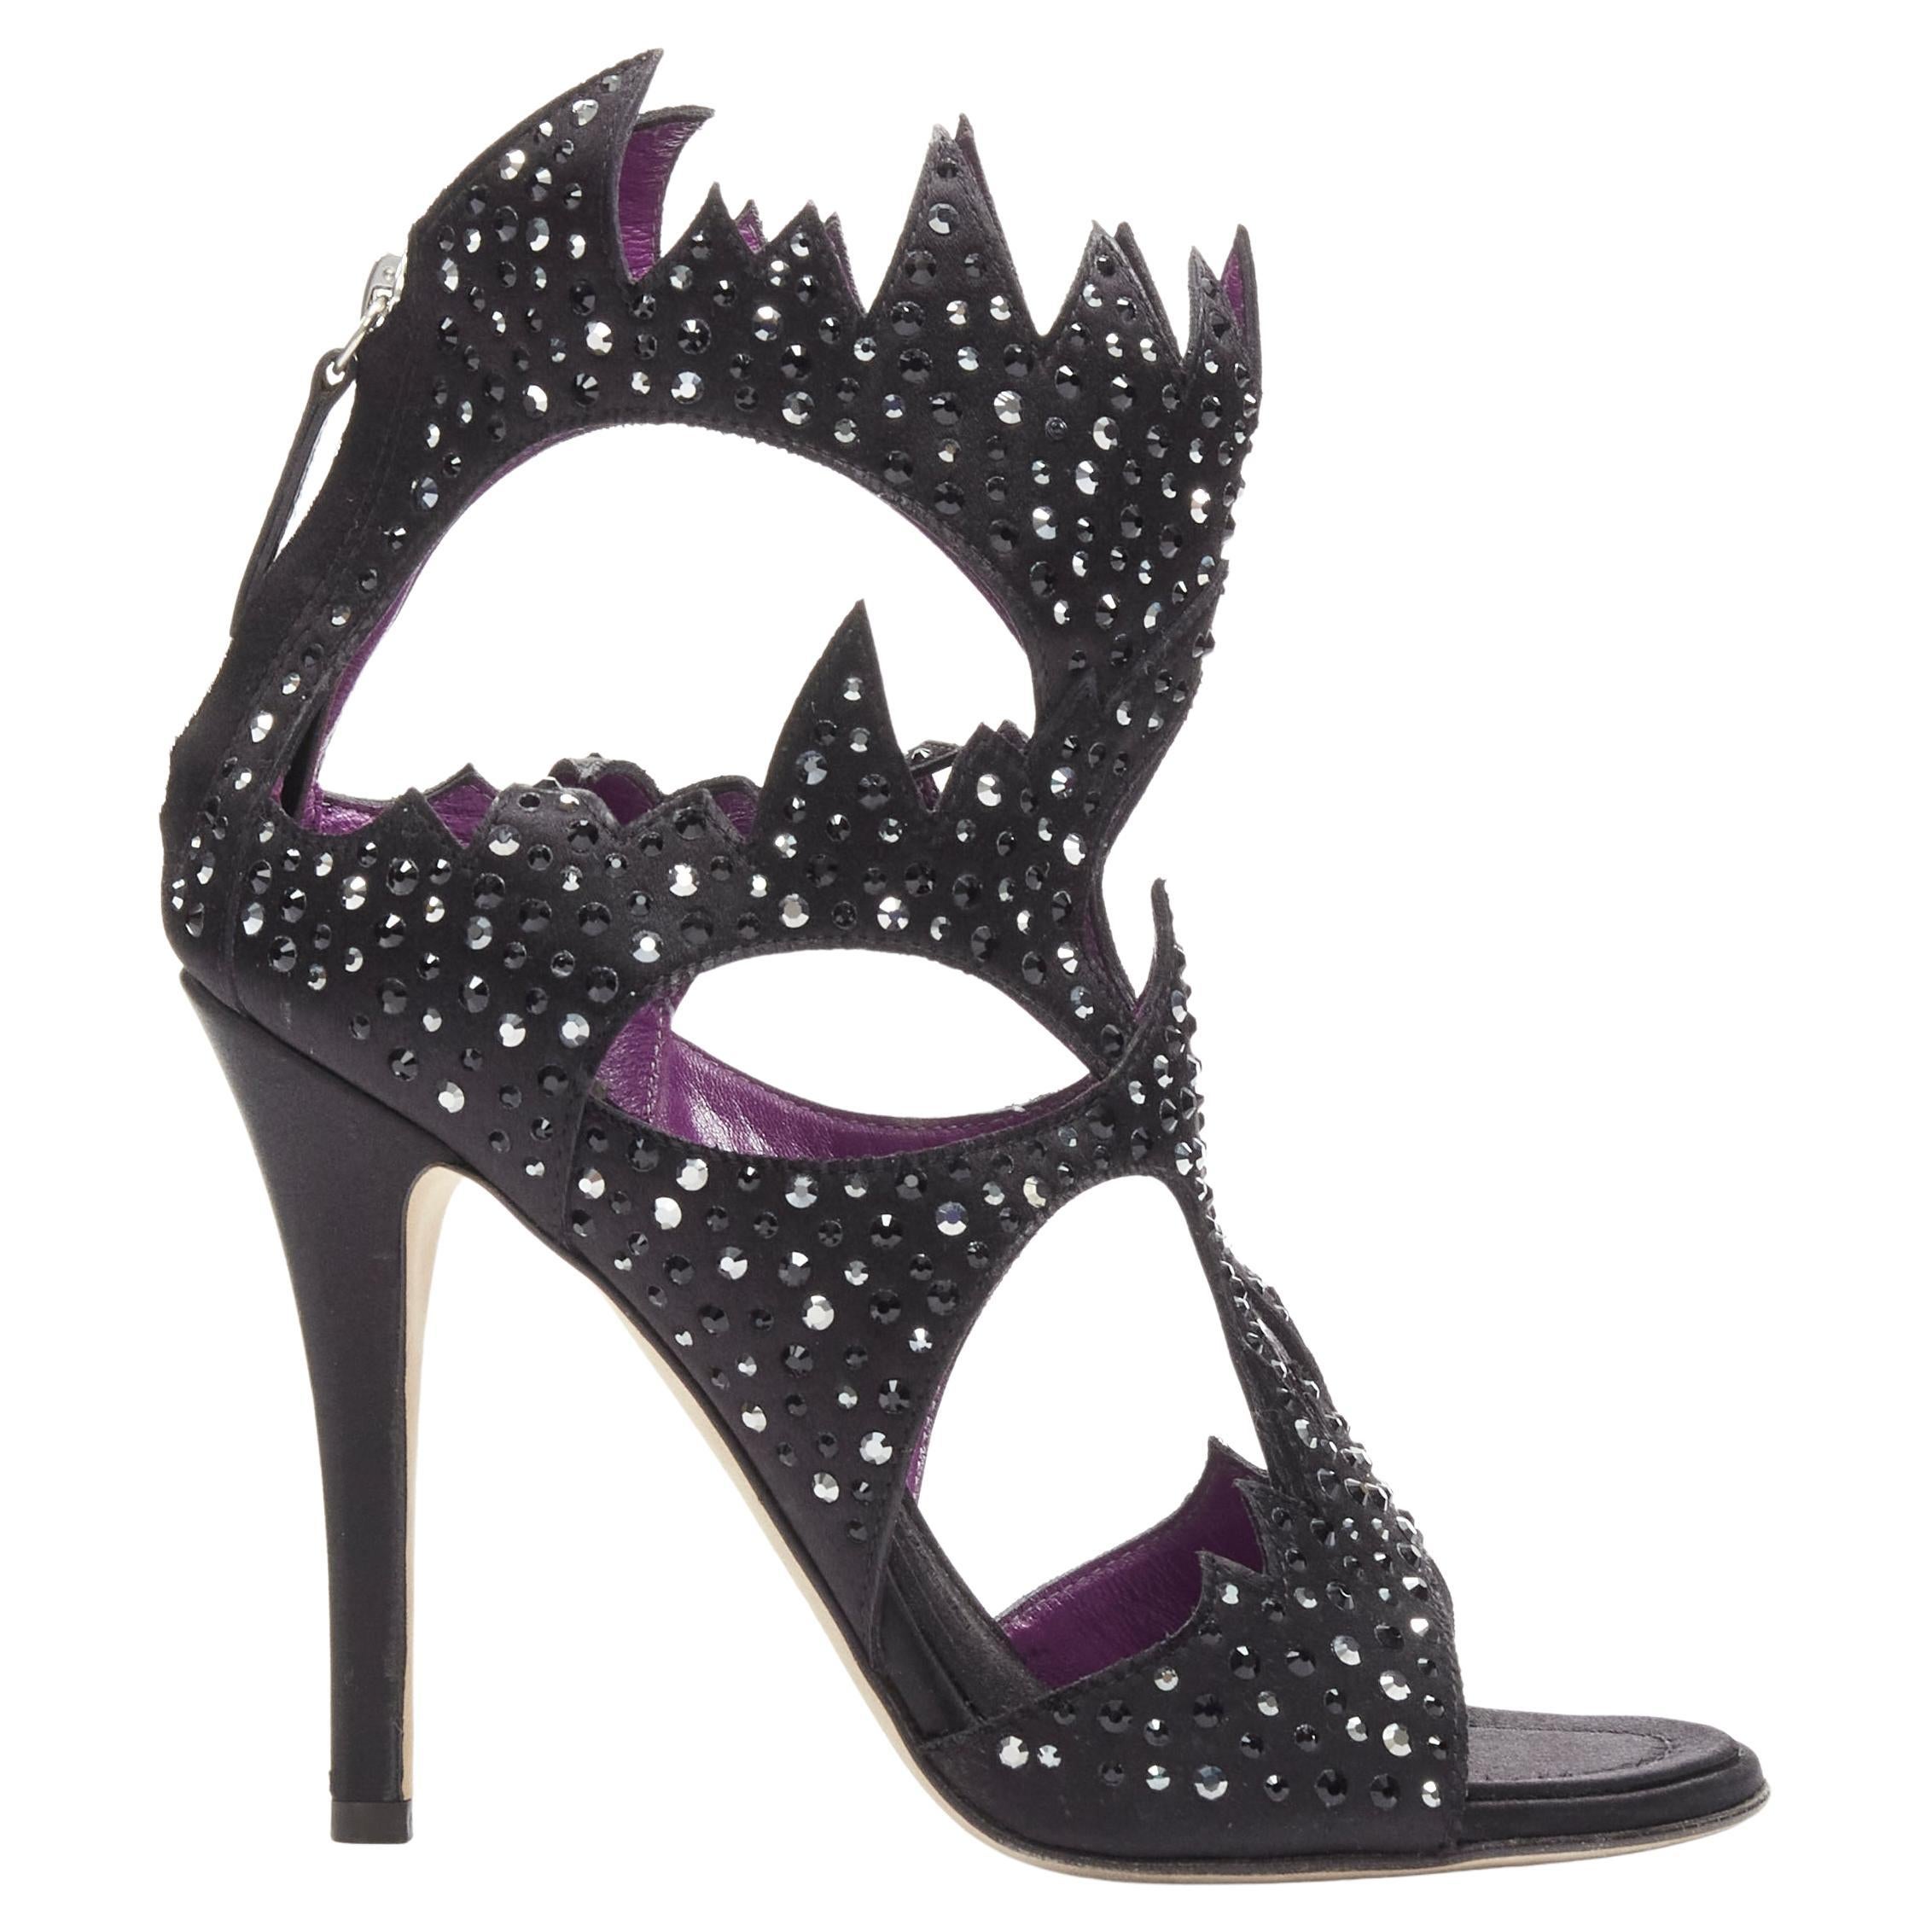 GIUSEPPE ZANOTTI black crystal embellished satin cutout sandals heels EU37.5 For Sale